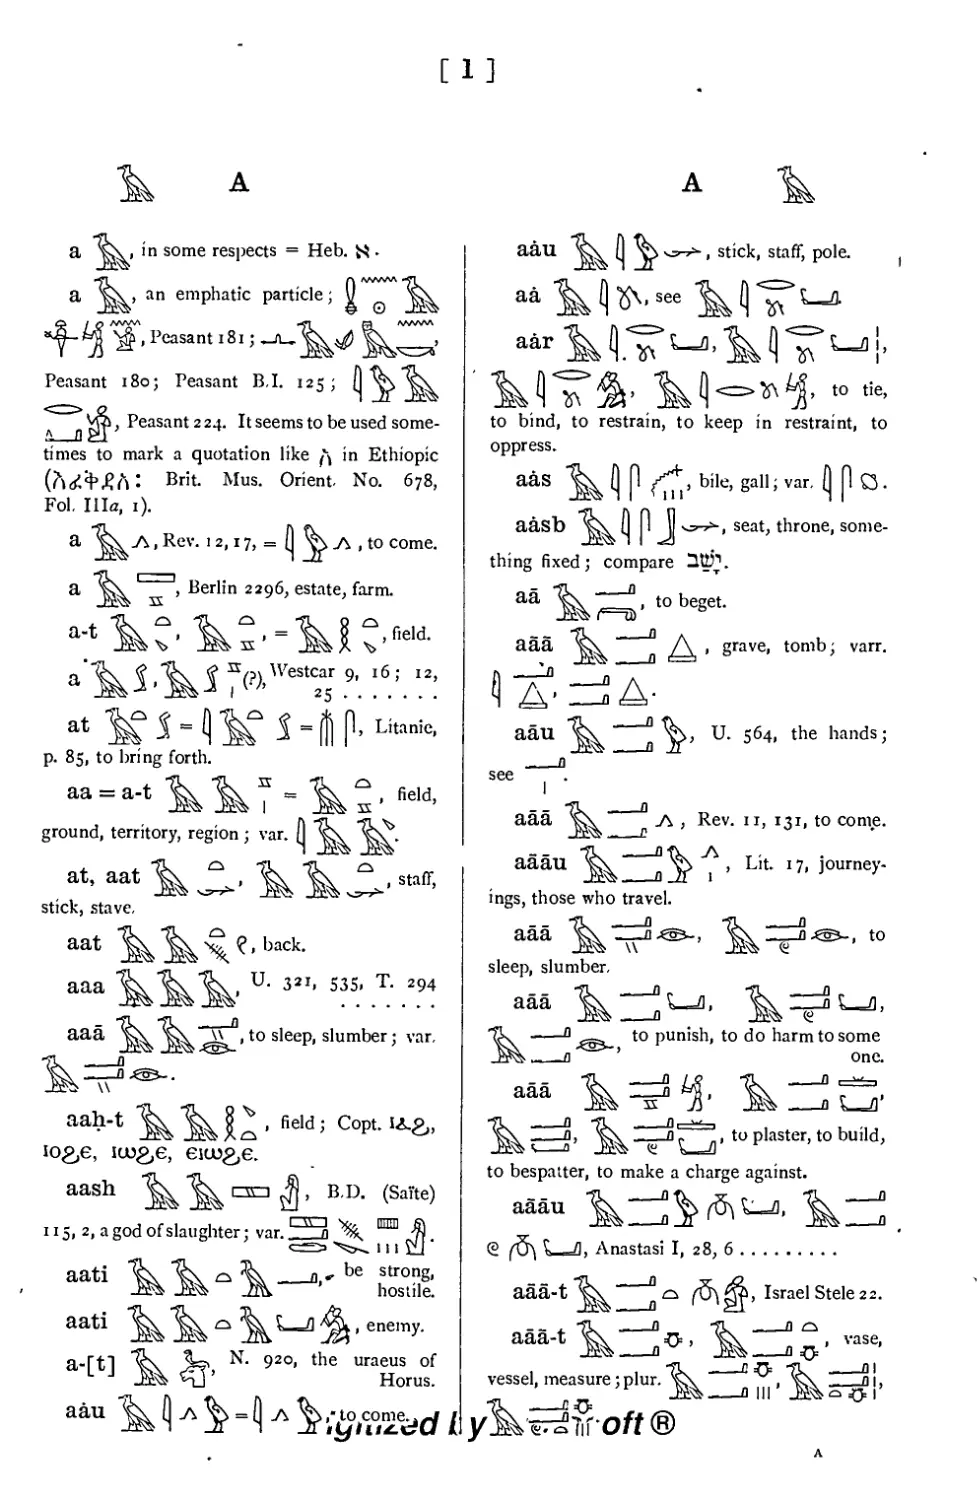 Egyptian Dictionary